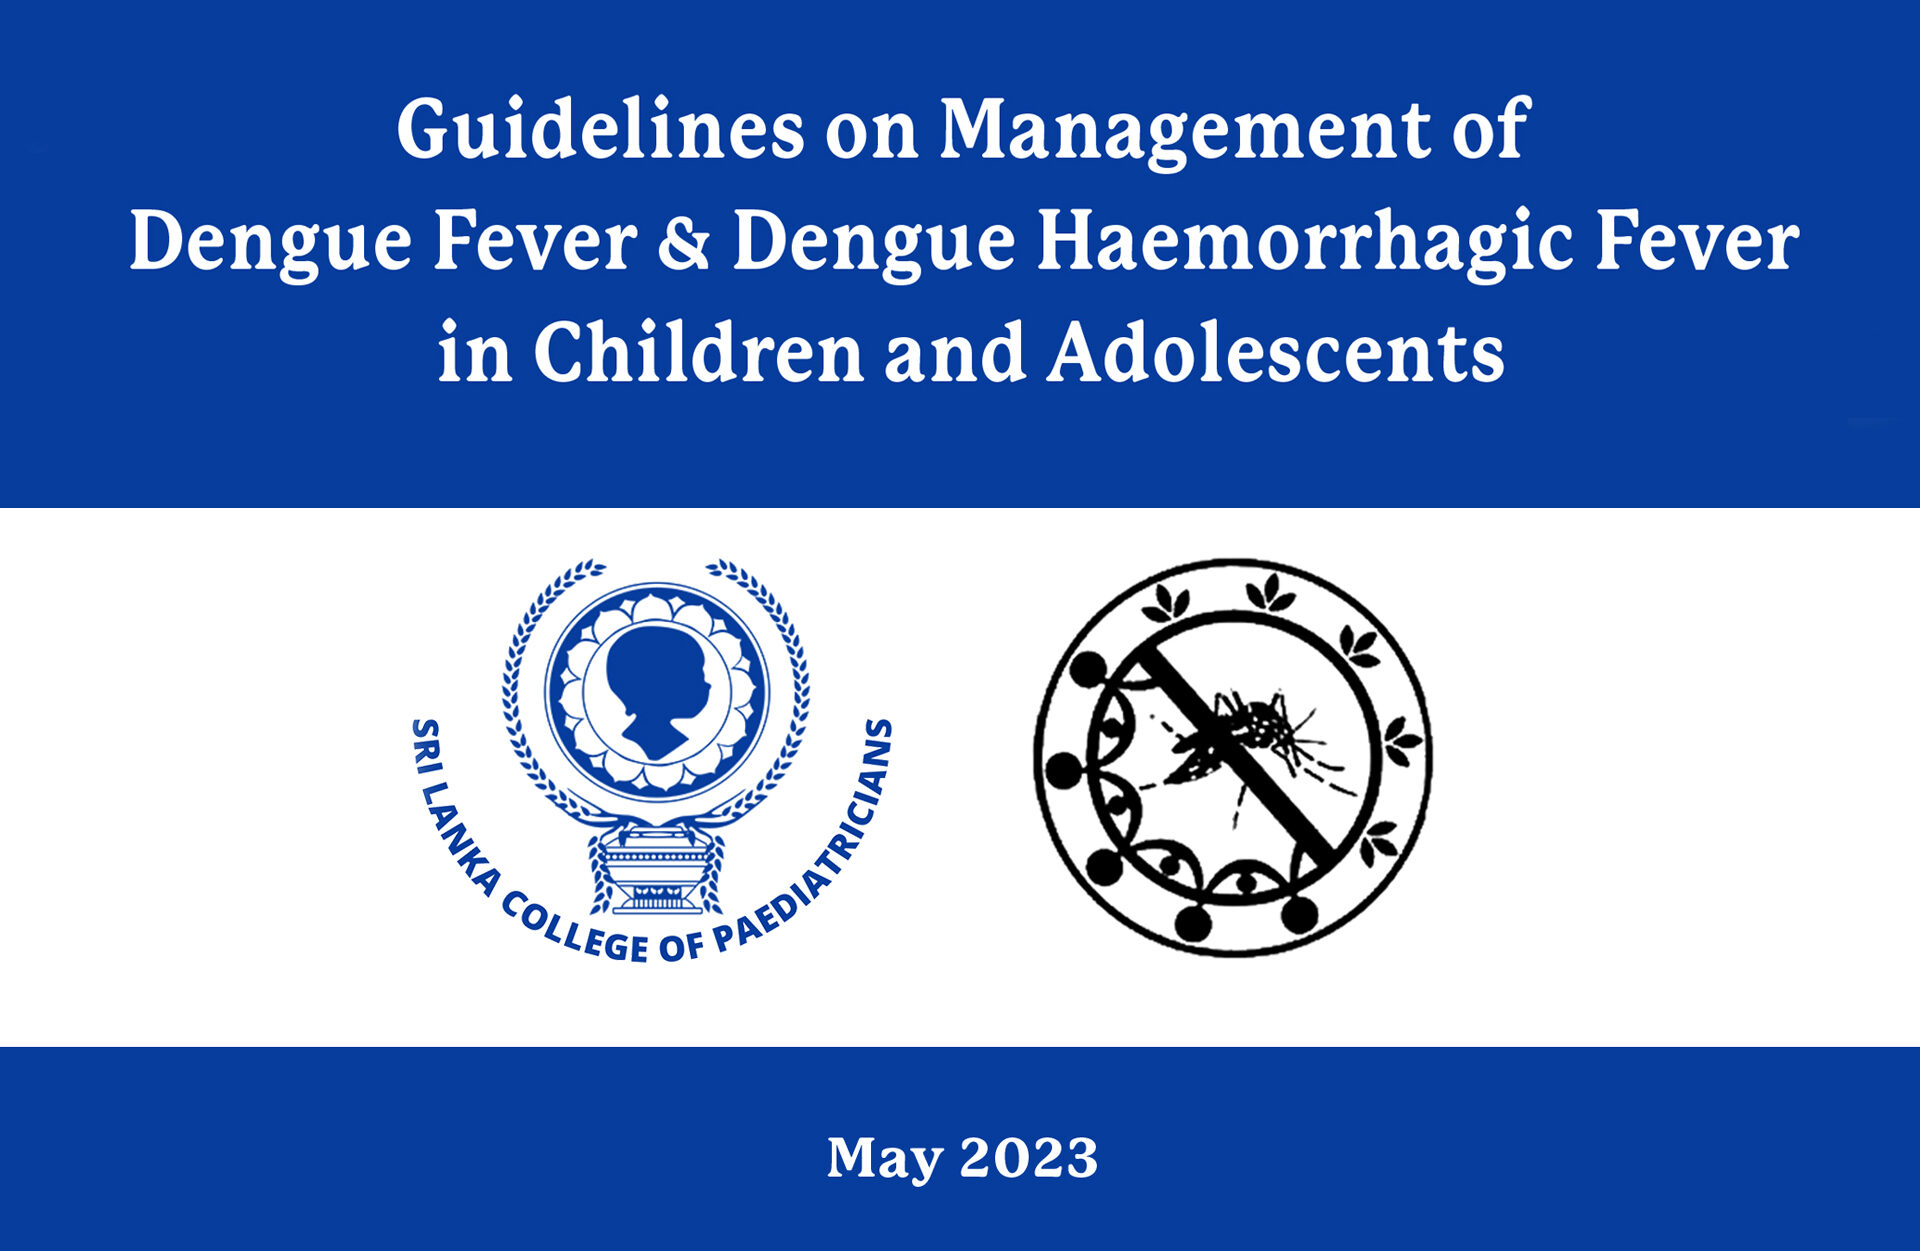 Guidelines on Management of Dengue Fever & Dengue Haemorrhagic Fever in Children and Adolescents